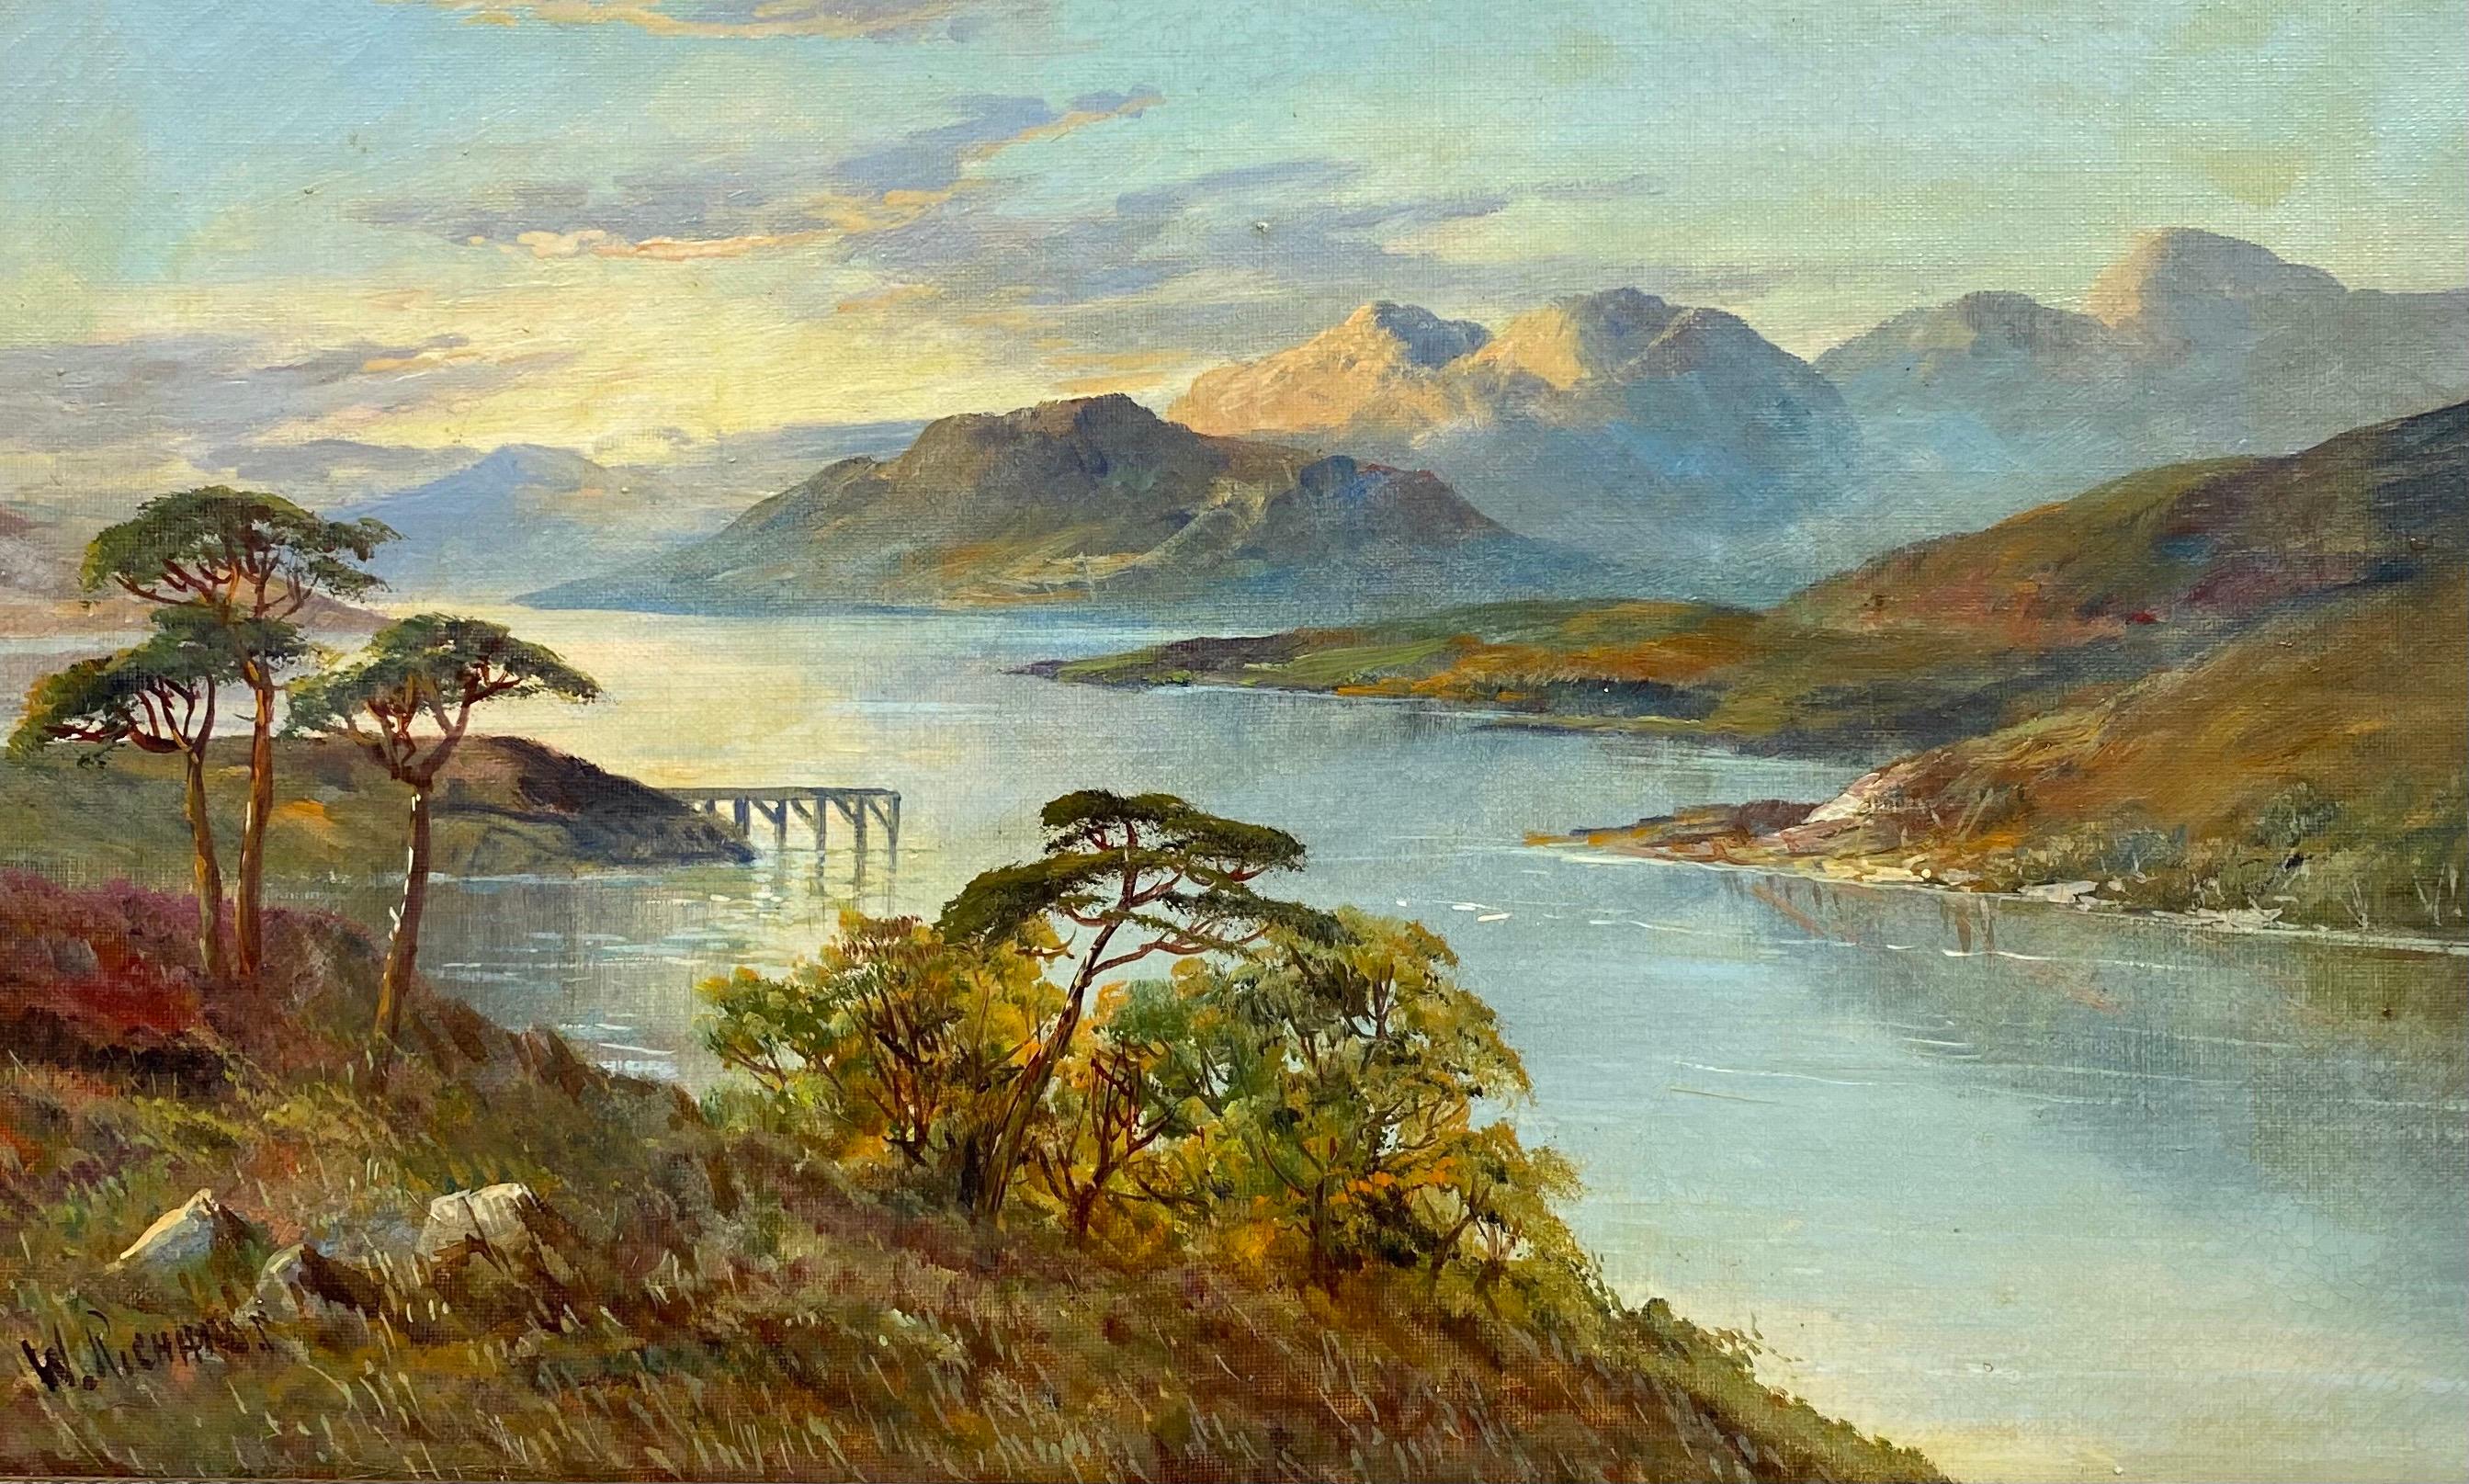 Francis E. Jamieson Figurative Painting - Luss Loch Lomond, Antique Scottish Highlands Oil Painting Fading Light Scotland